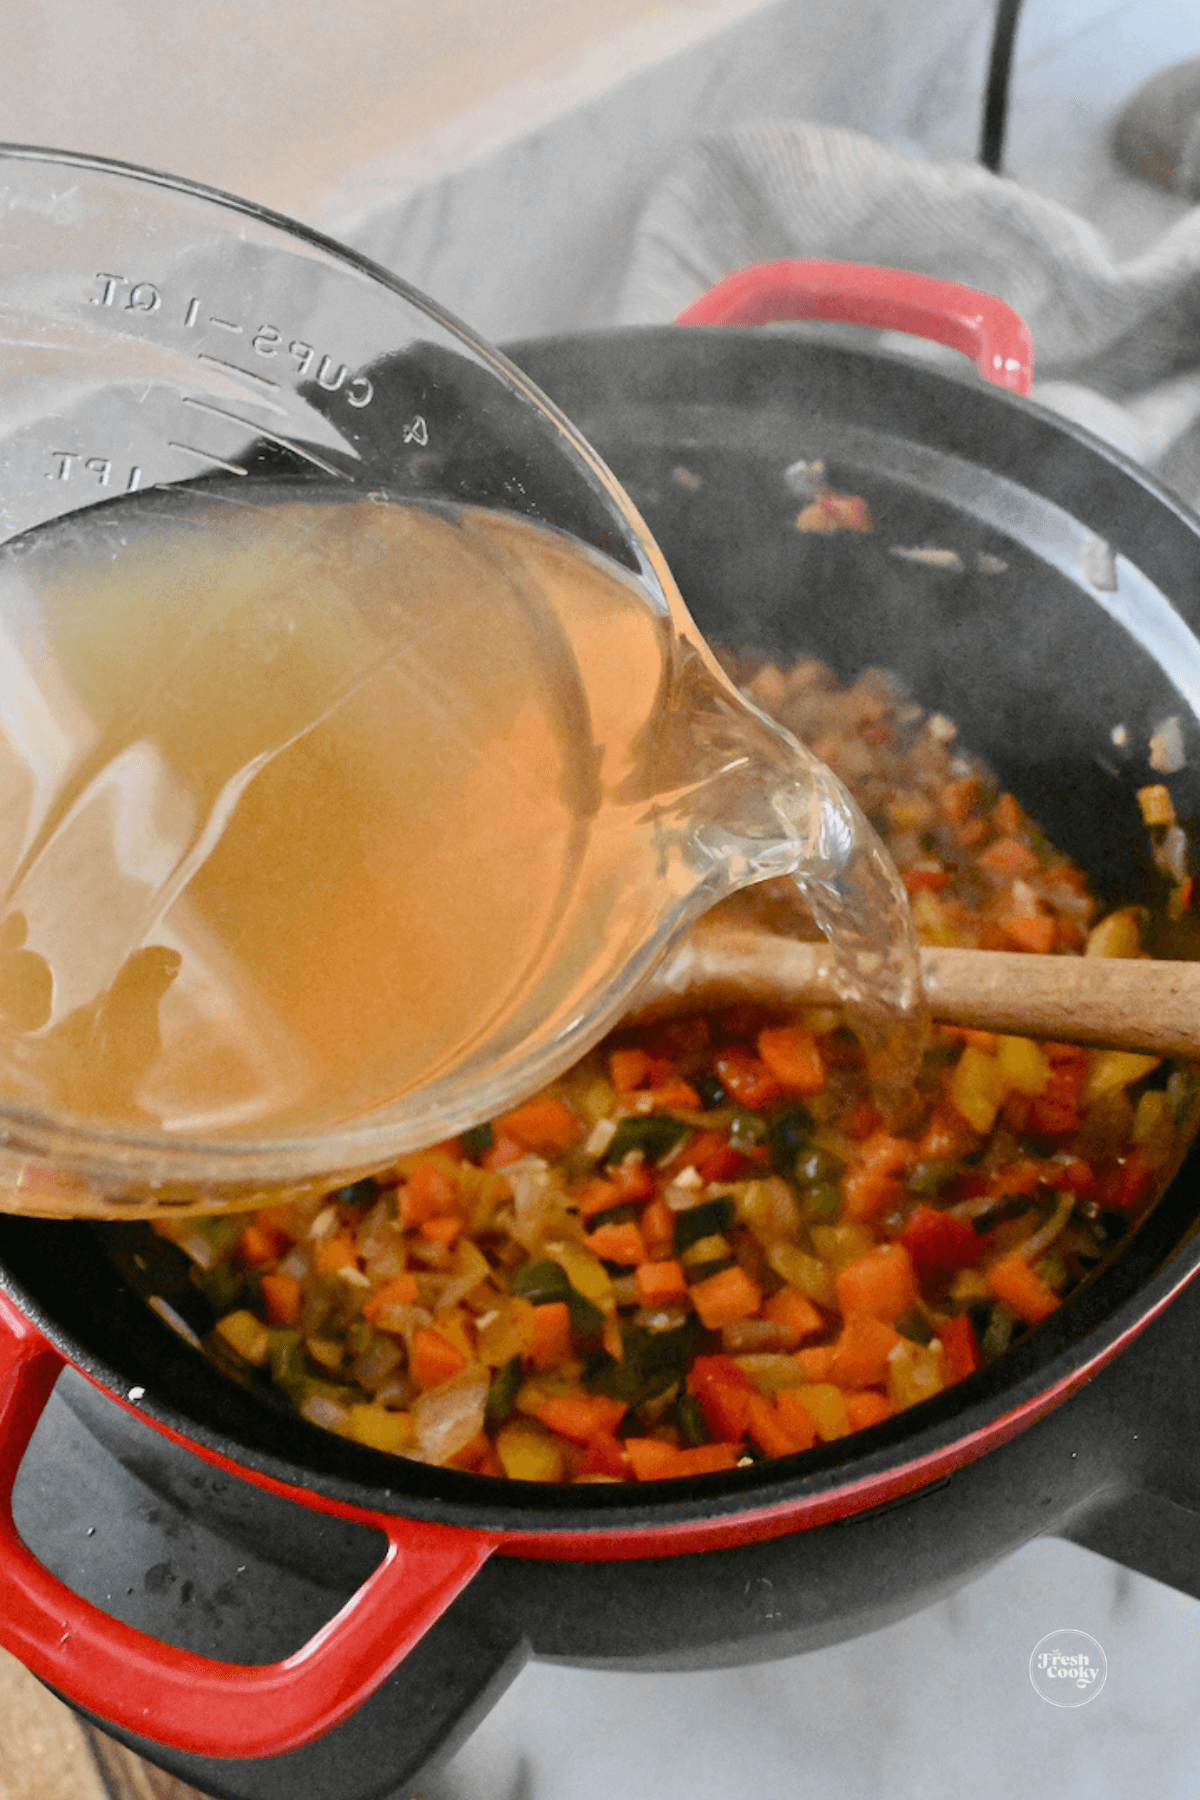 Add vegetable broth to deglaze the pan.